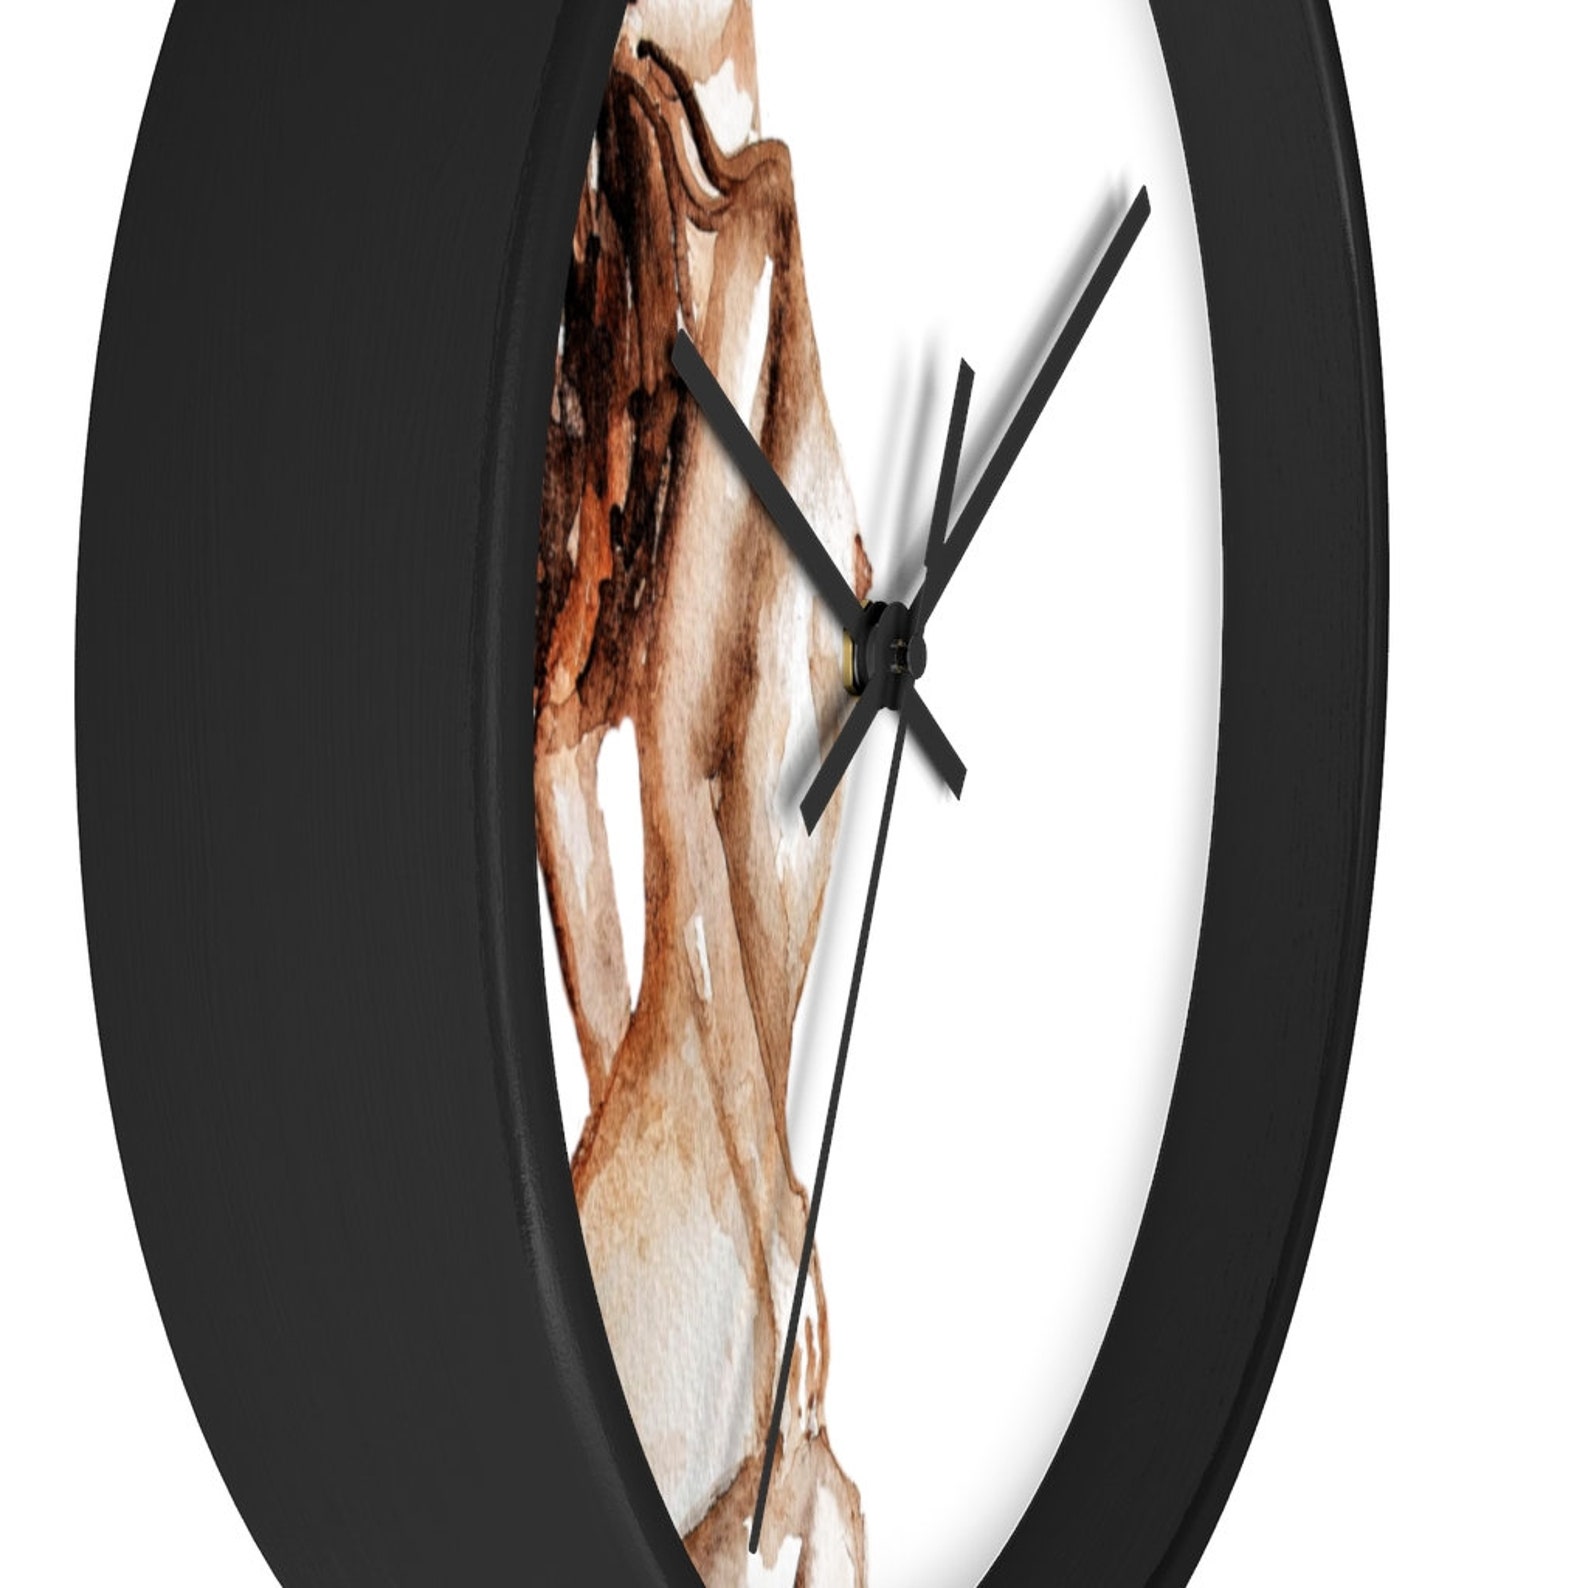 Nude Woman Wall Clock Adult Wall Clock Handpainted Etsy